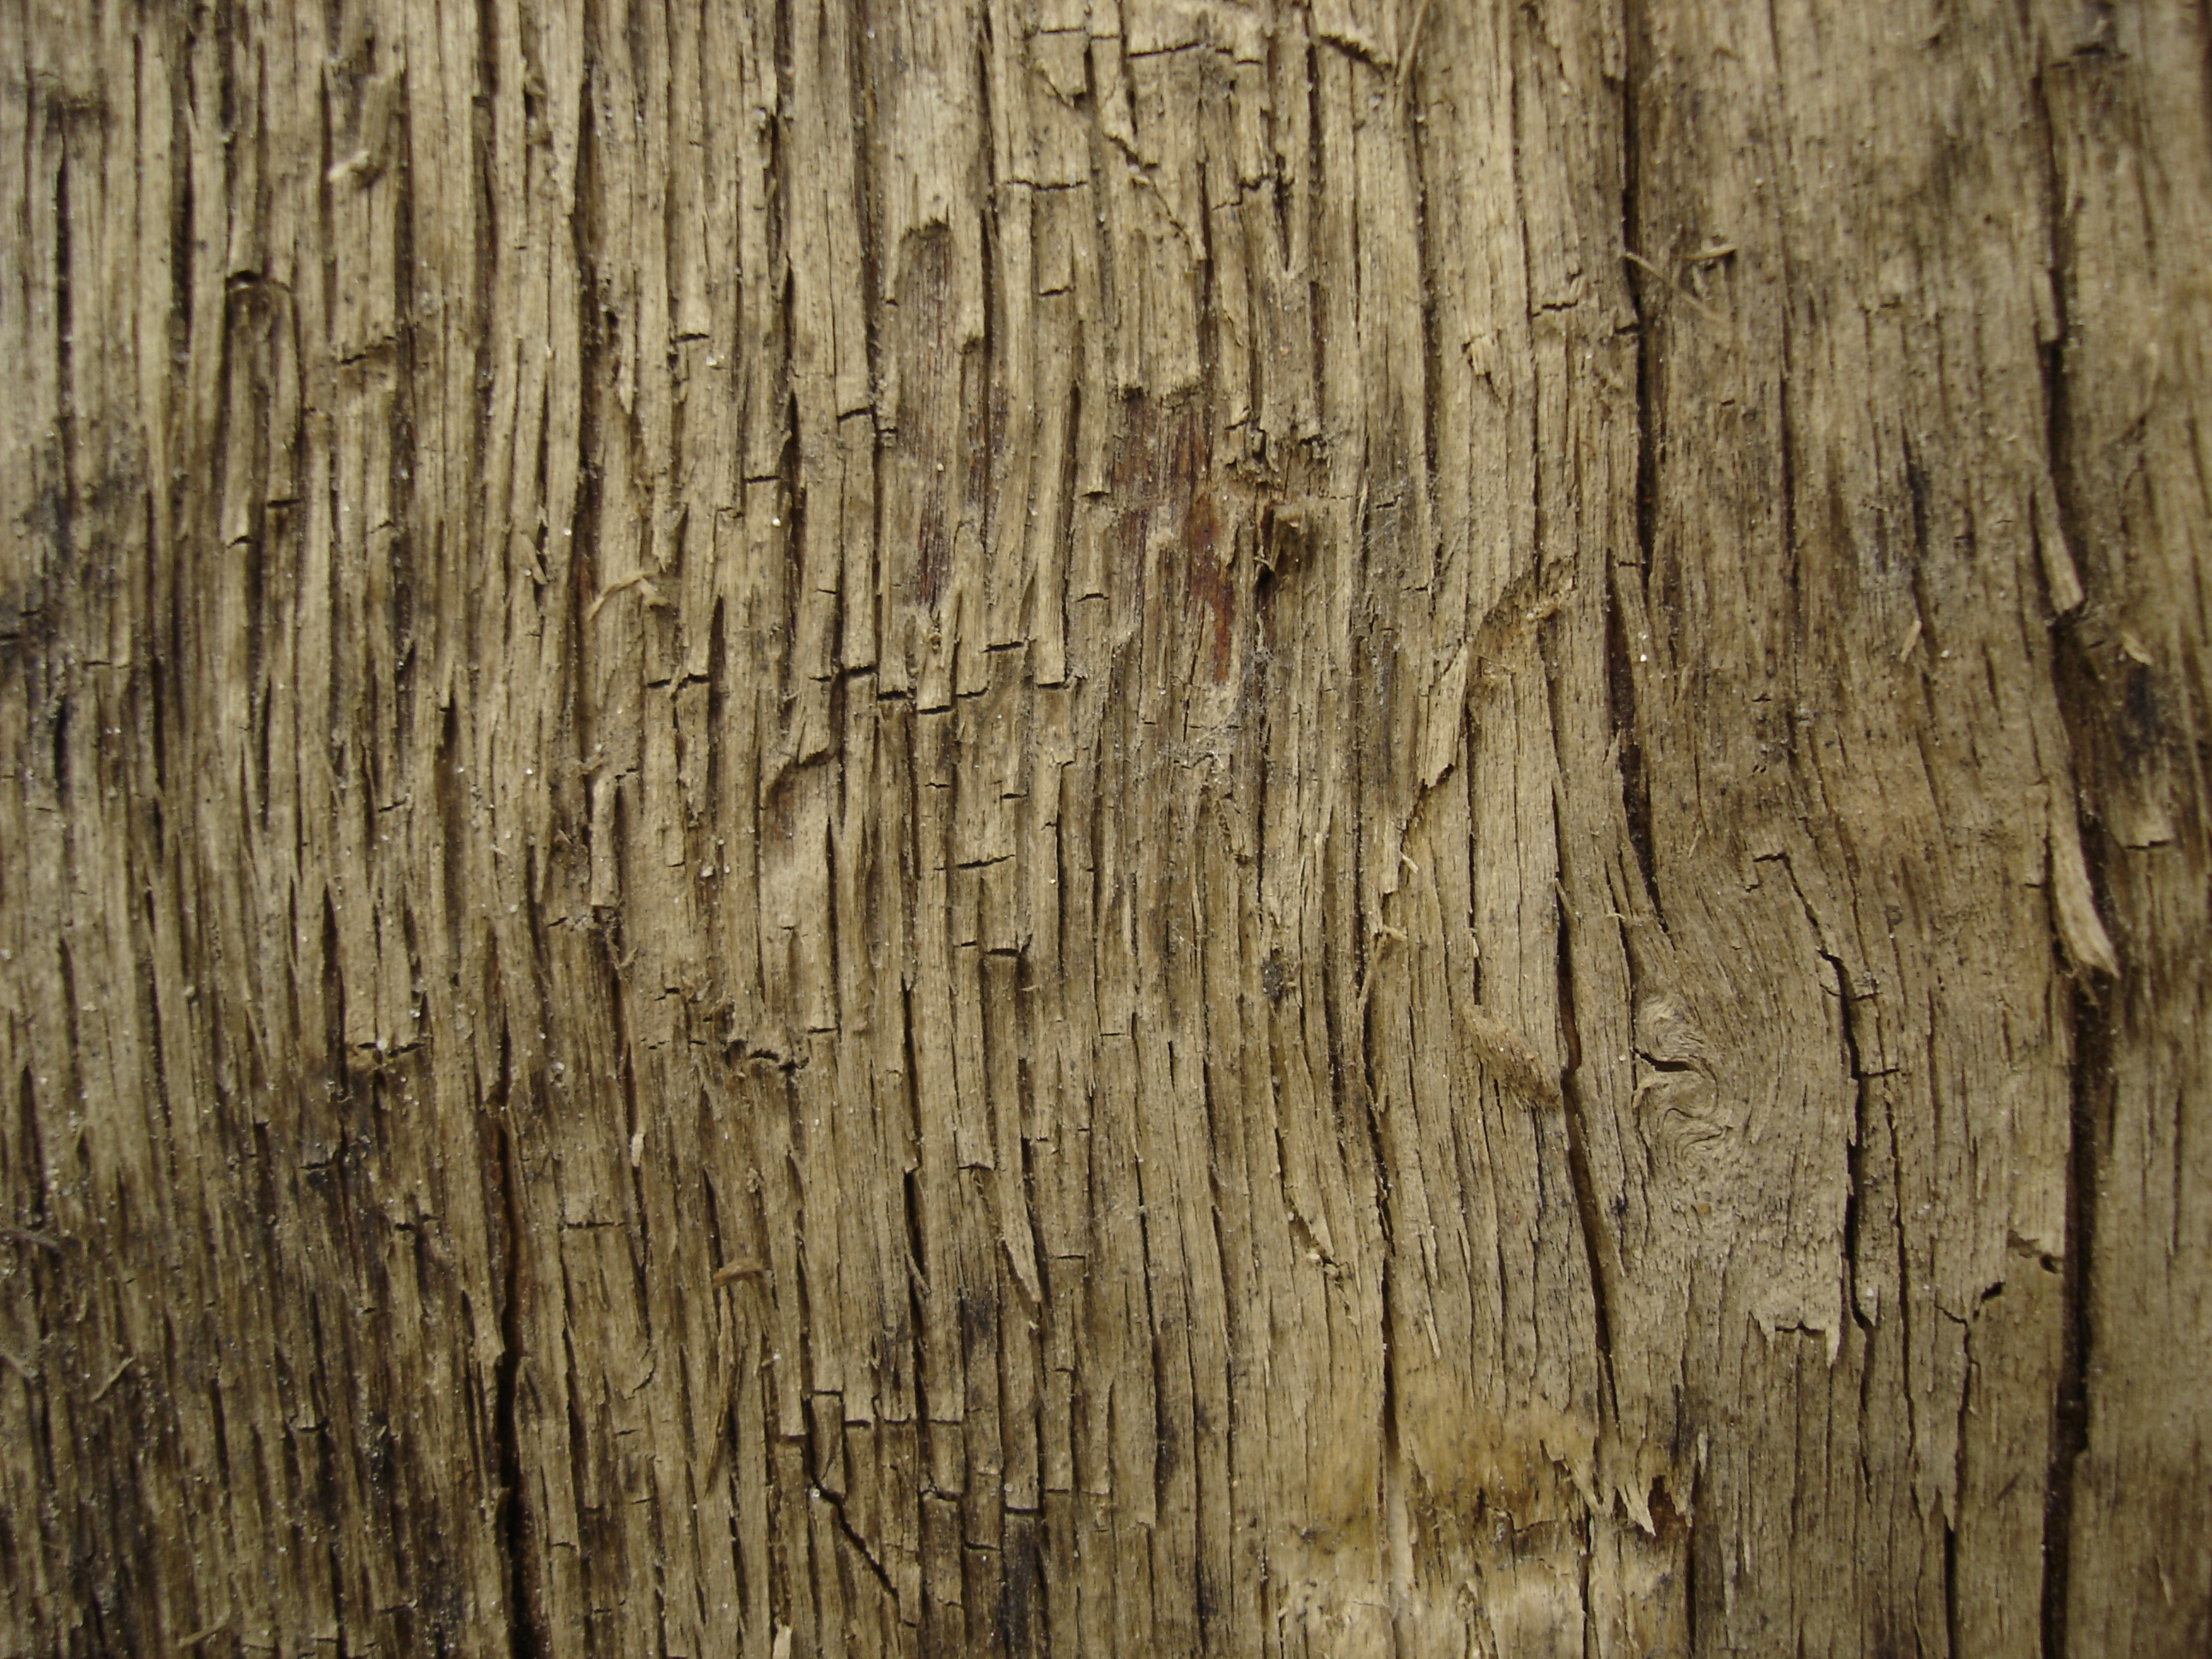 Tree_texture___11_by_LunaNYXstock.jpg